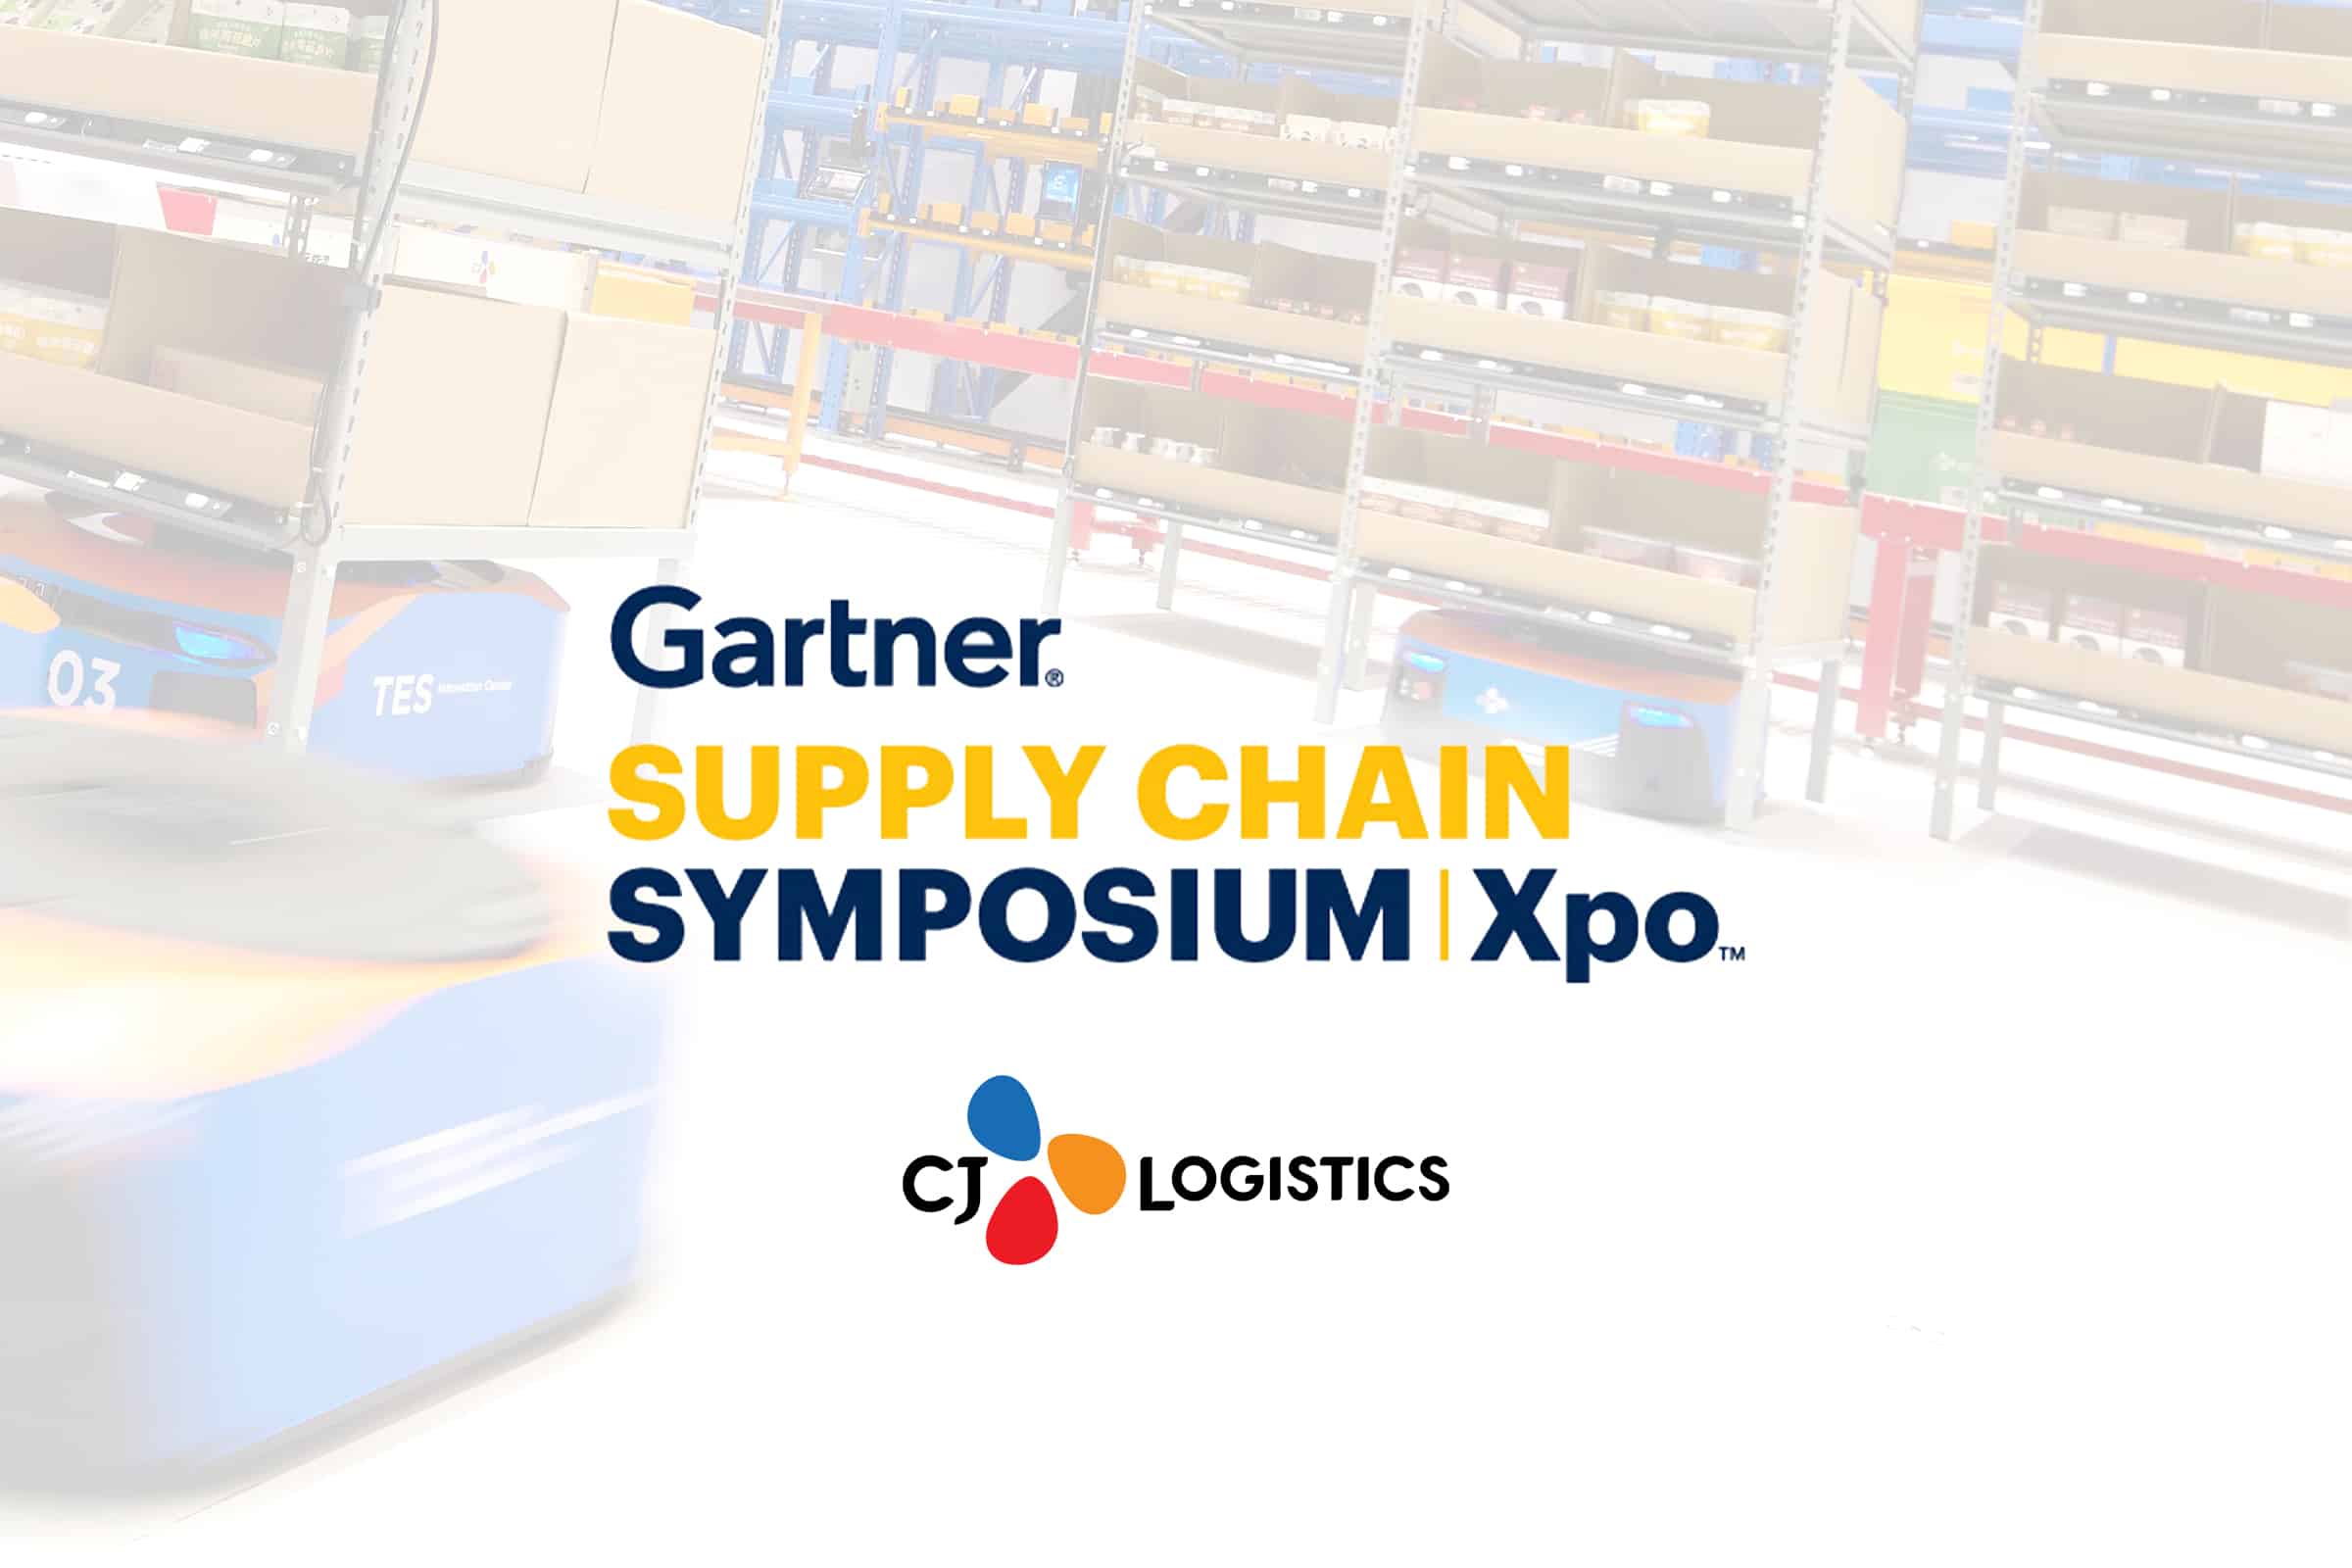 CJ Logistics leaders to attend Gartner Supply Chain Symposium/Xpo™ CJ